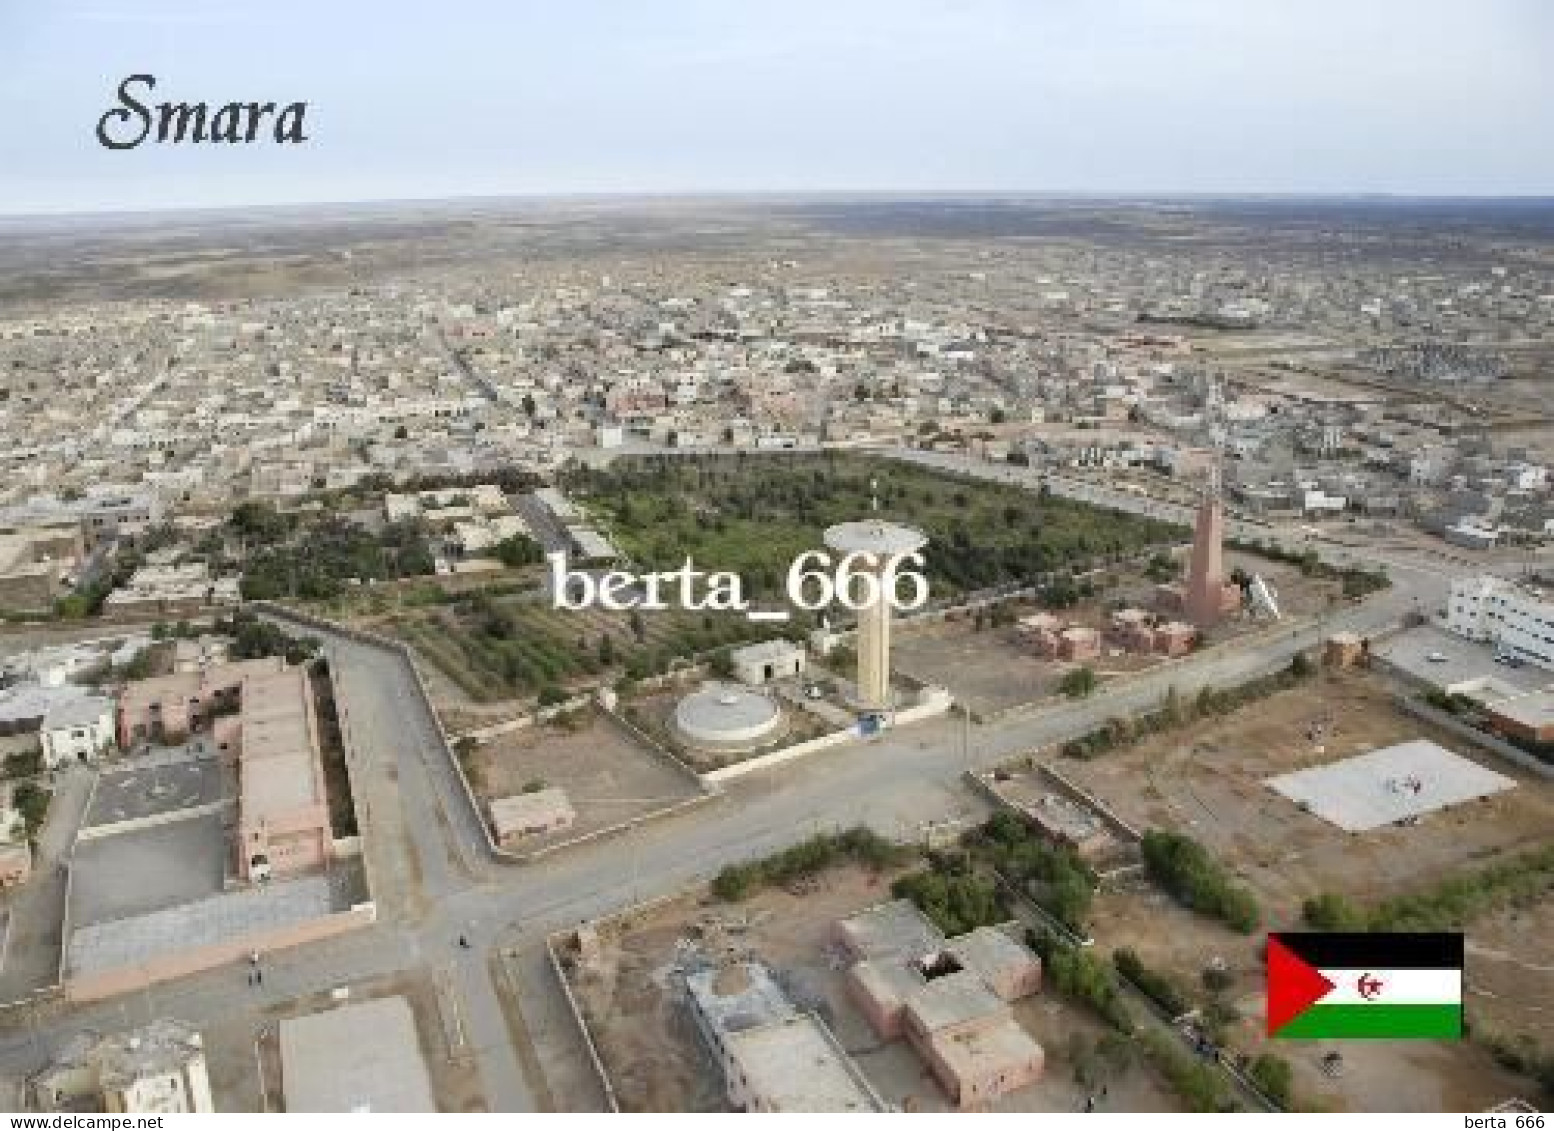 Western Sahara Smara Aerial View New Postcard - Sahara Occidental